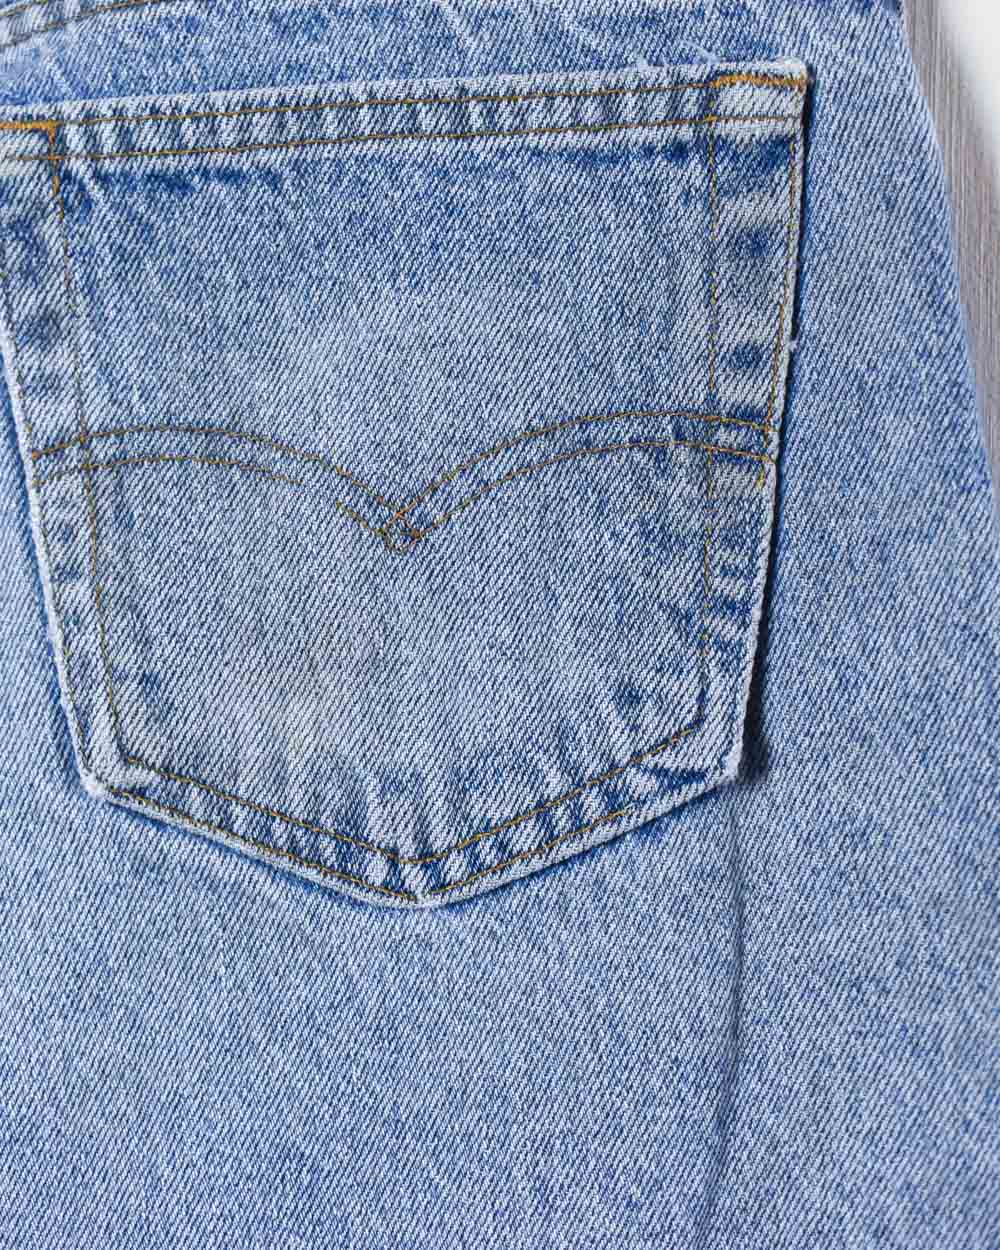 Blue Levi's USA 550 Jeans - W36 L30